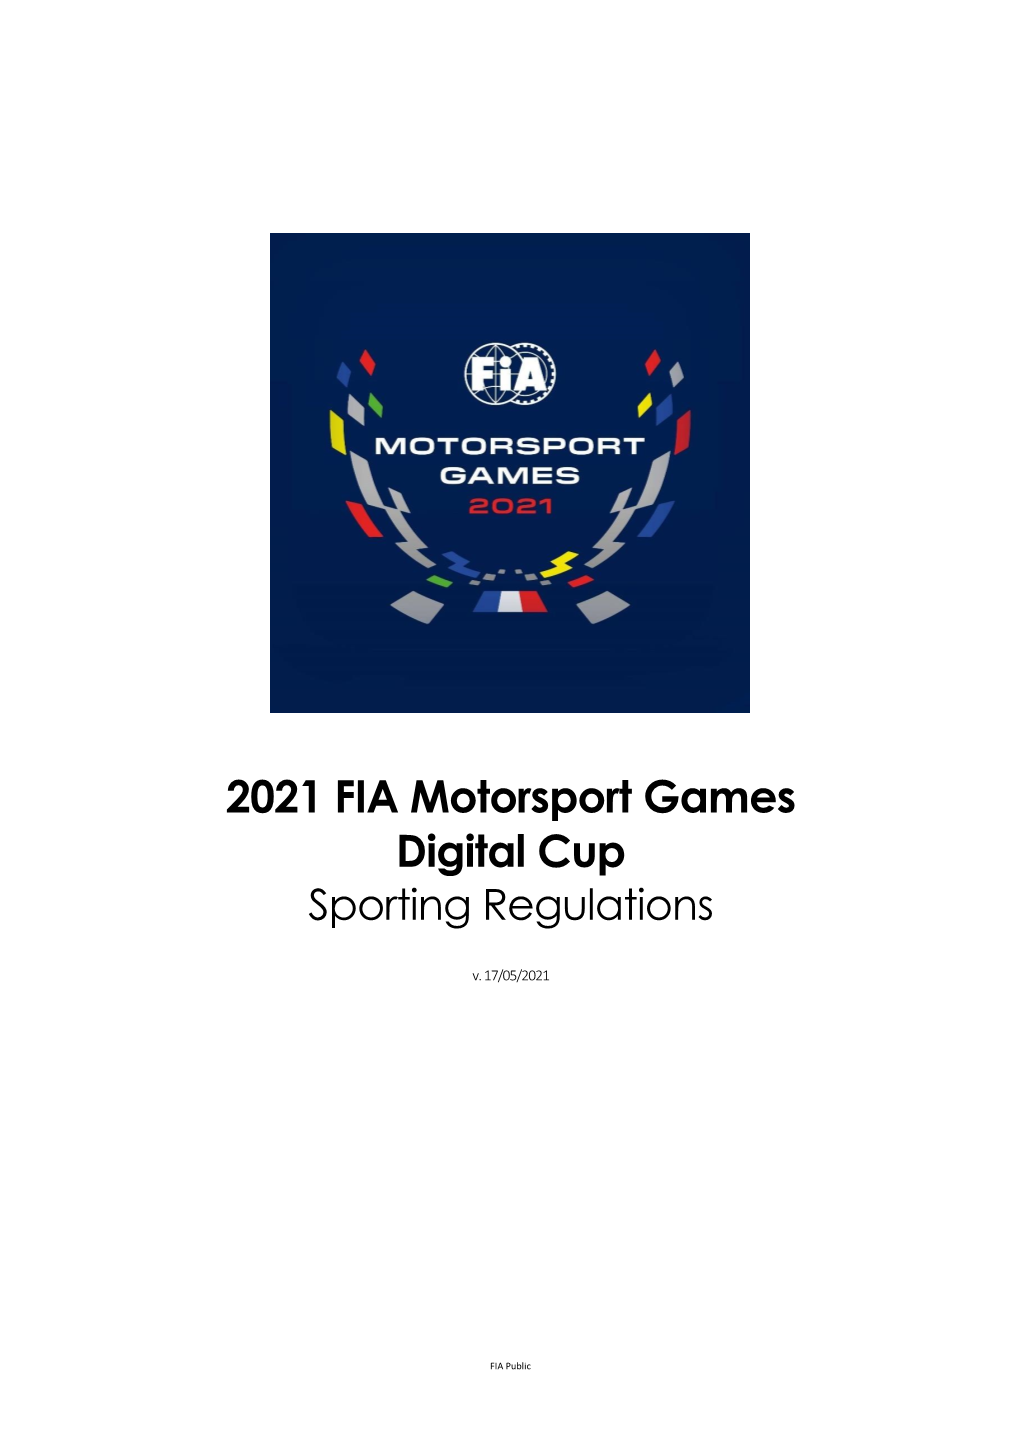 2021 FIA Motorsport Games Digital Cup Sporting Regulations